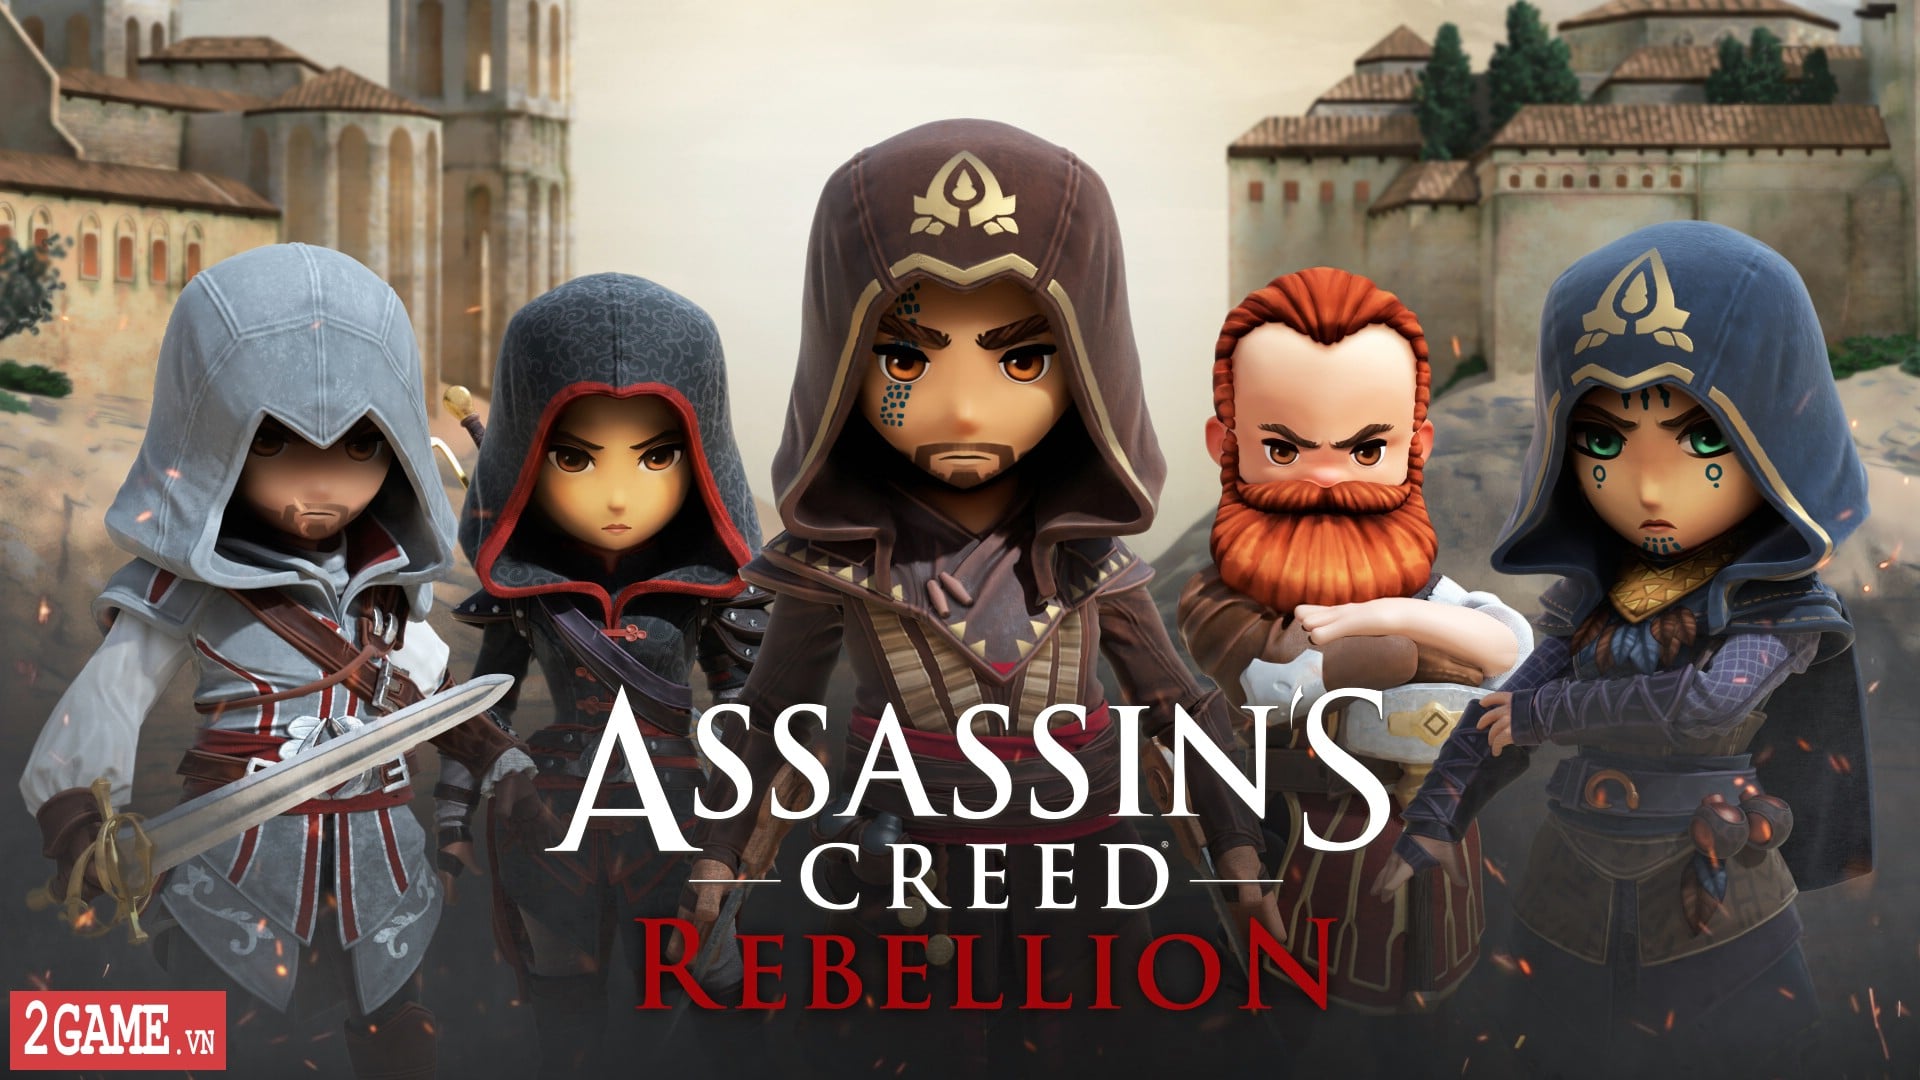 2game-Assassins-Creed-Rebellion-mobile-1.jpg (1920×1080)